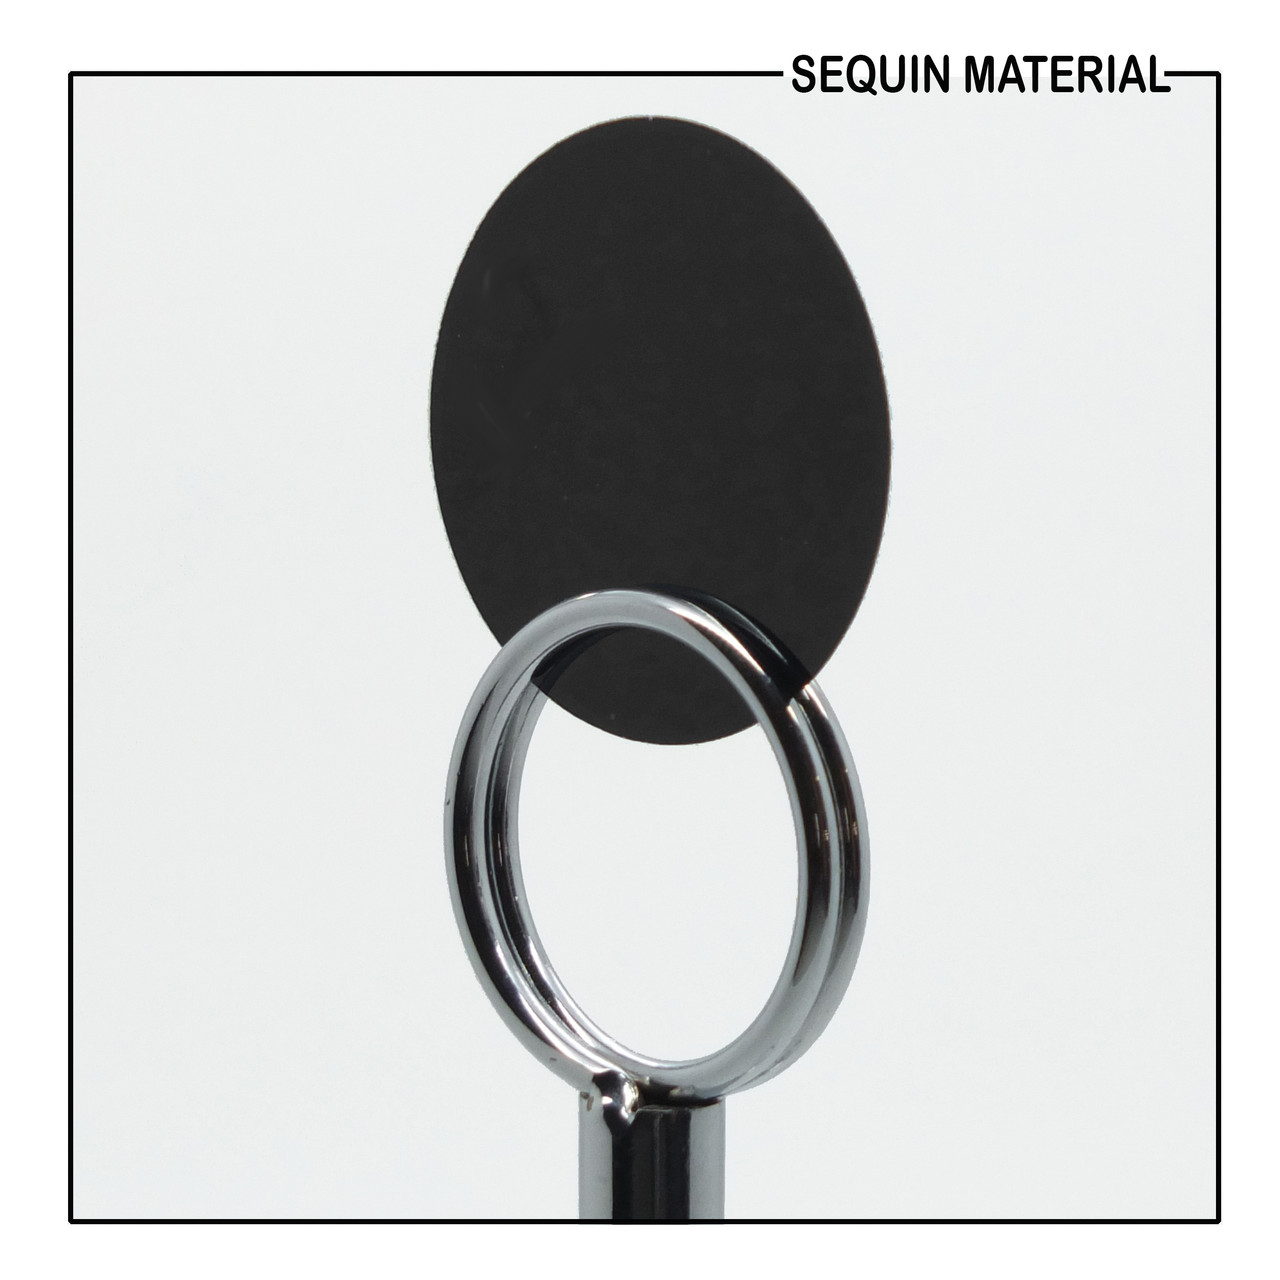 SequinsUSA Black Matte Duo Reversible Sequin Material Filml RL919